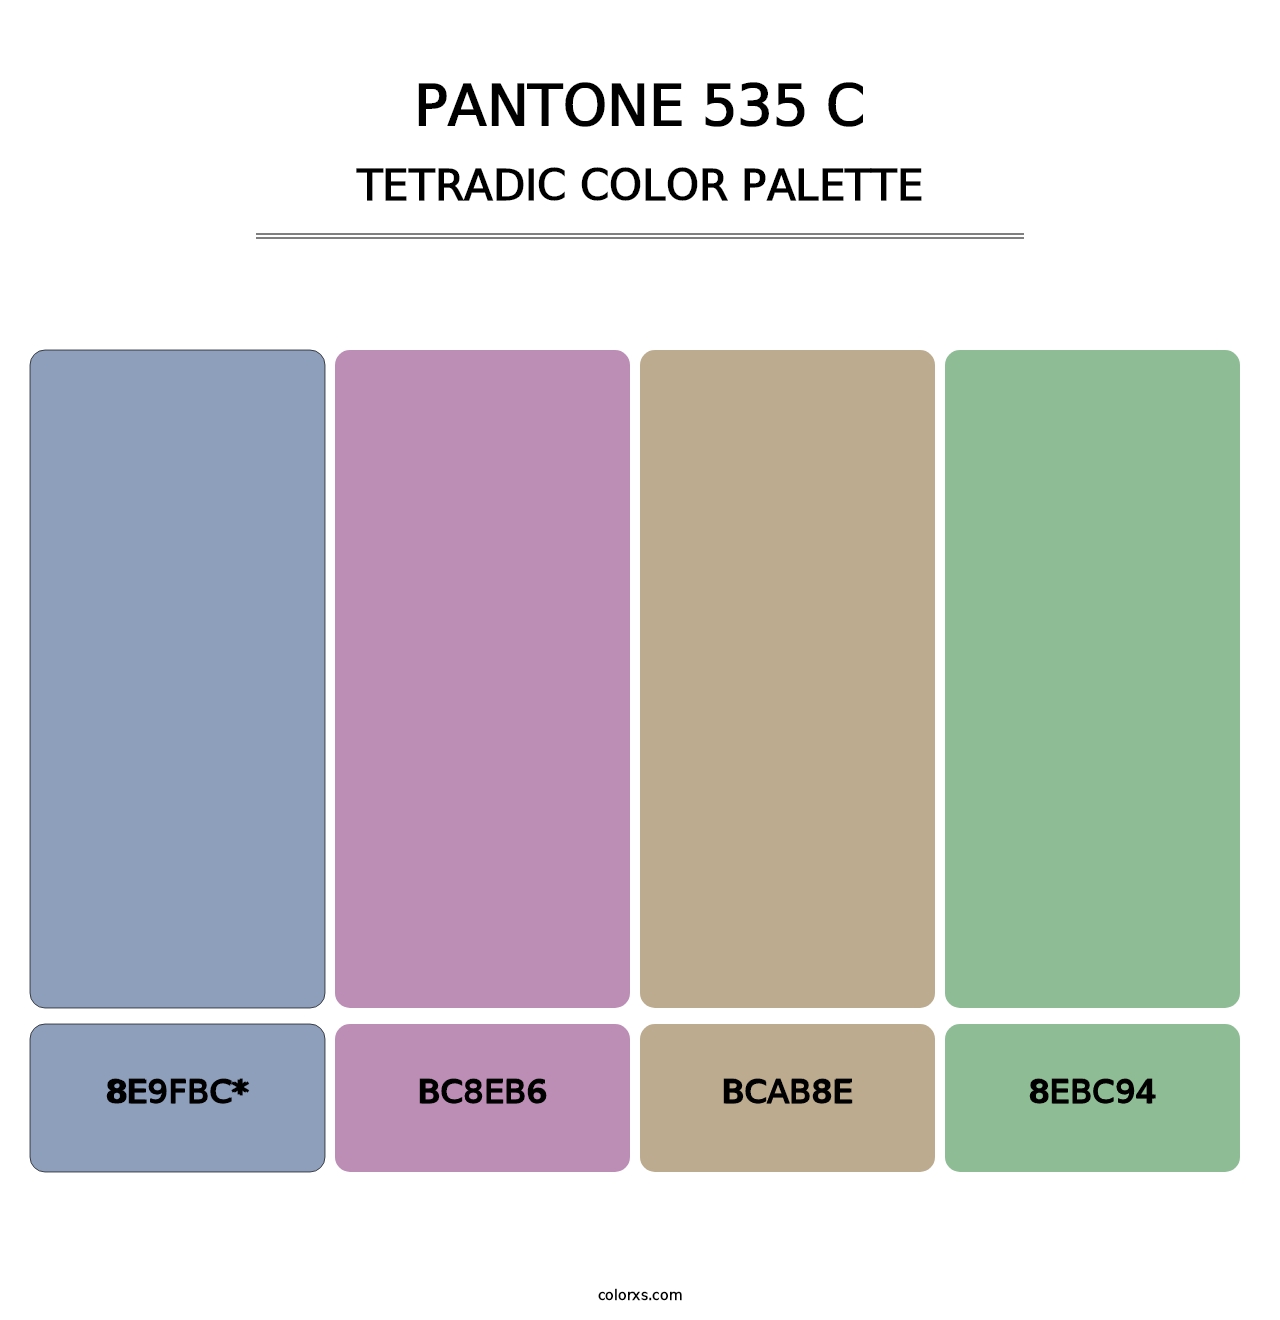 PANTONE 535 C - Tetradic Color Palette